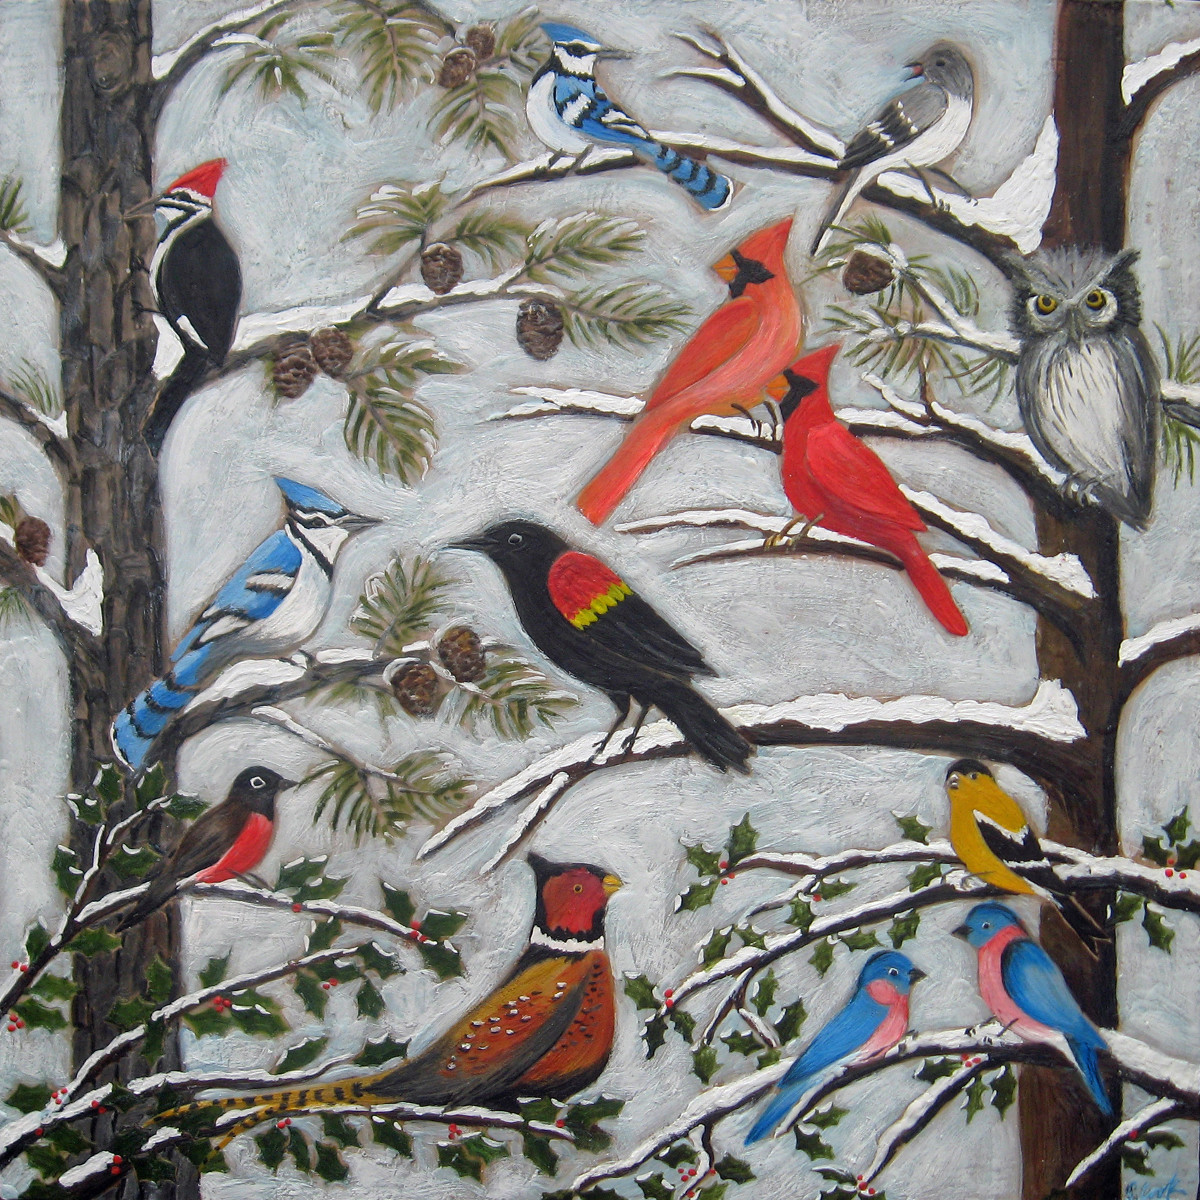 Sherry Cook's Winter Birds